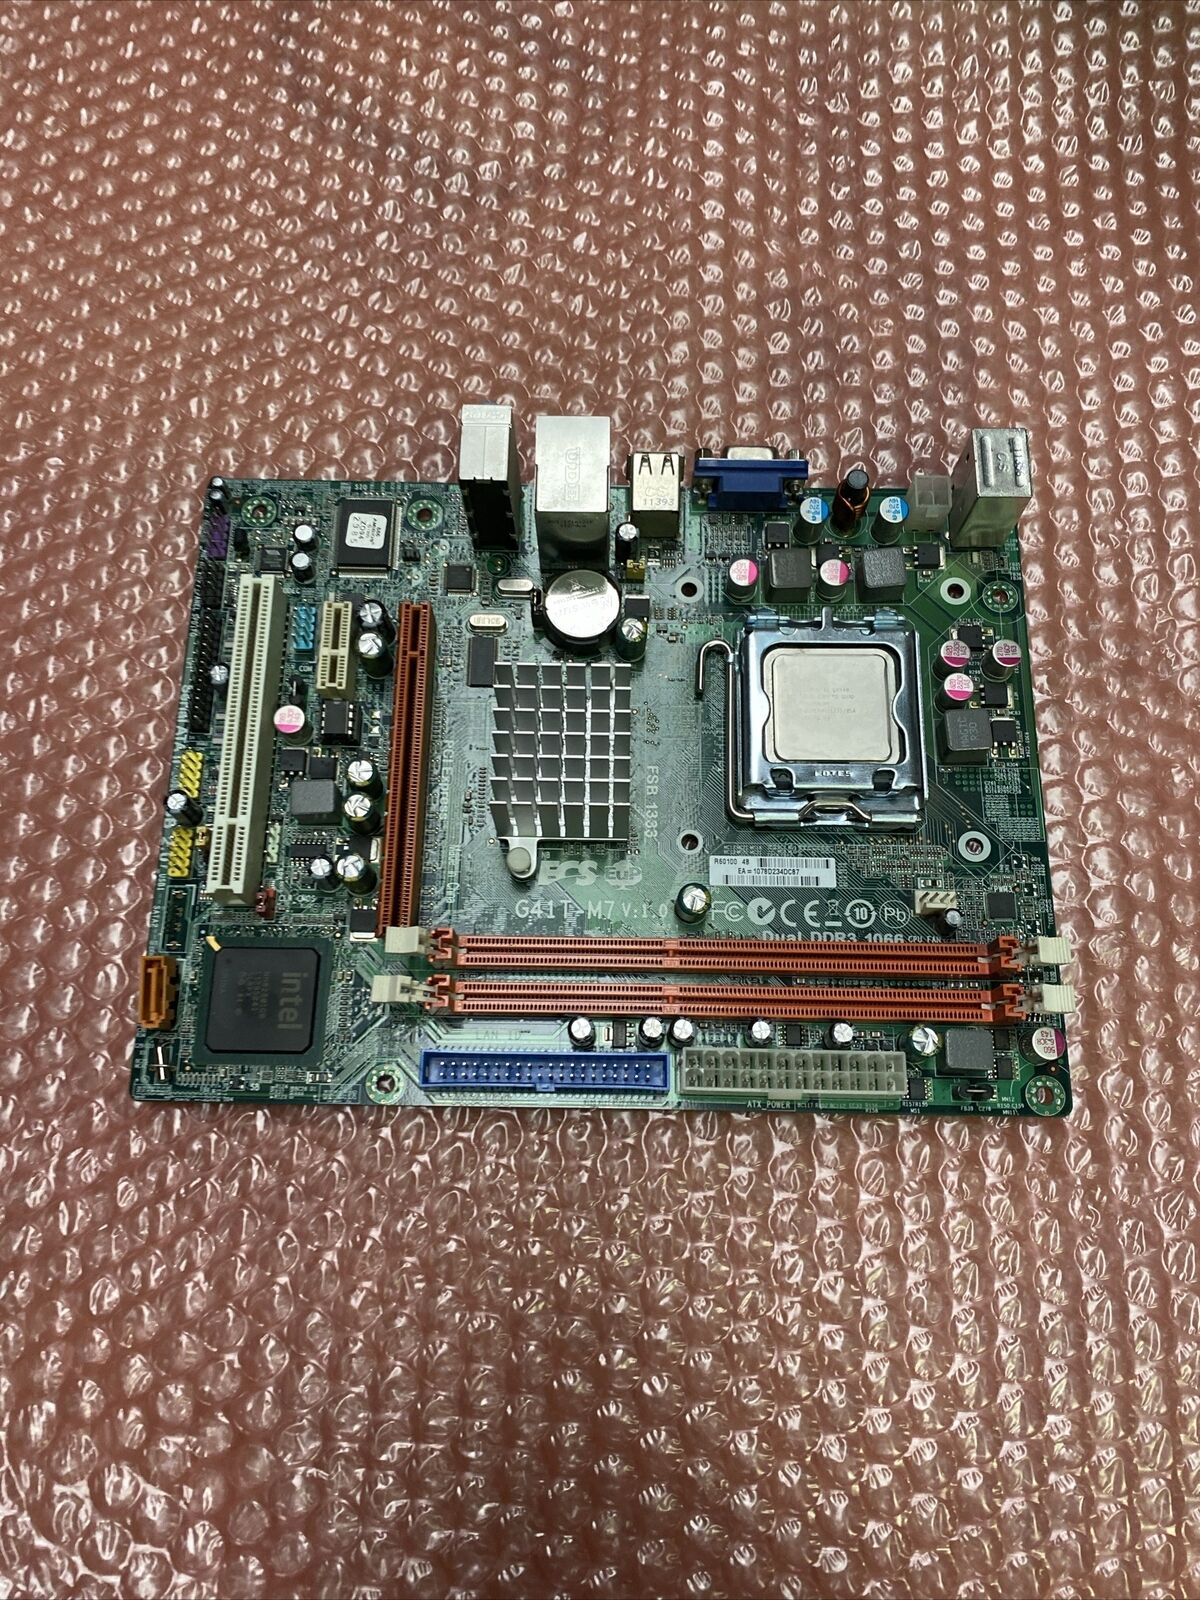 ECS G41T-M7 V:1.0 Socket 775 Motherboard with Intel Core 2 Quad CPU